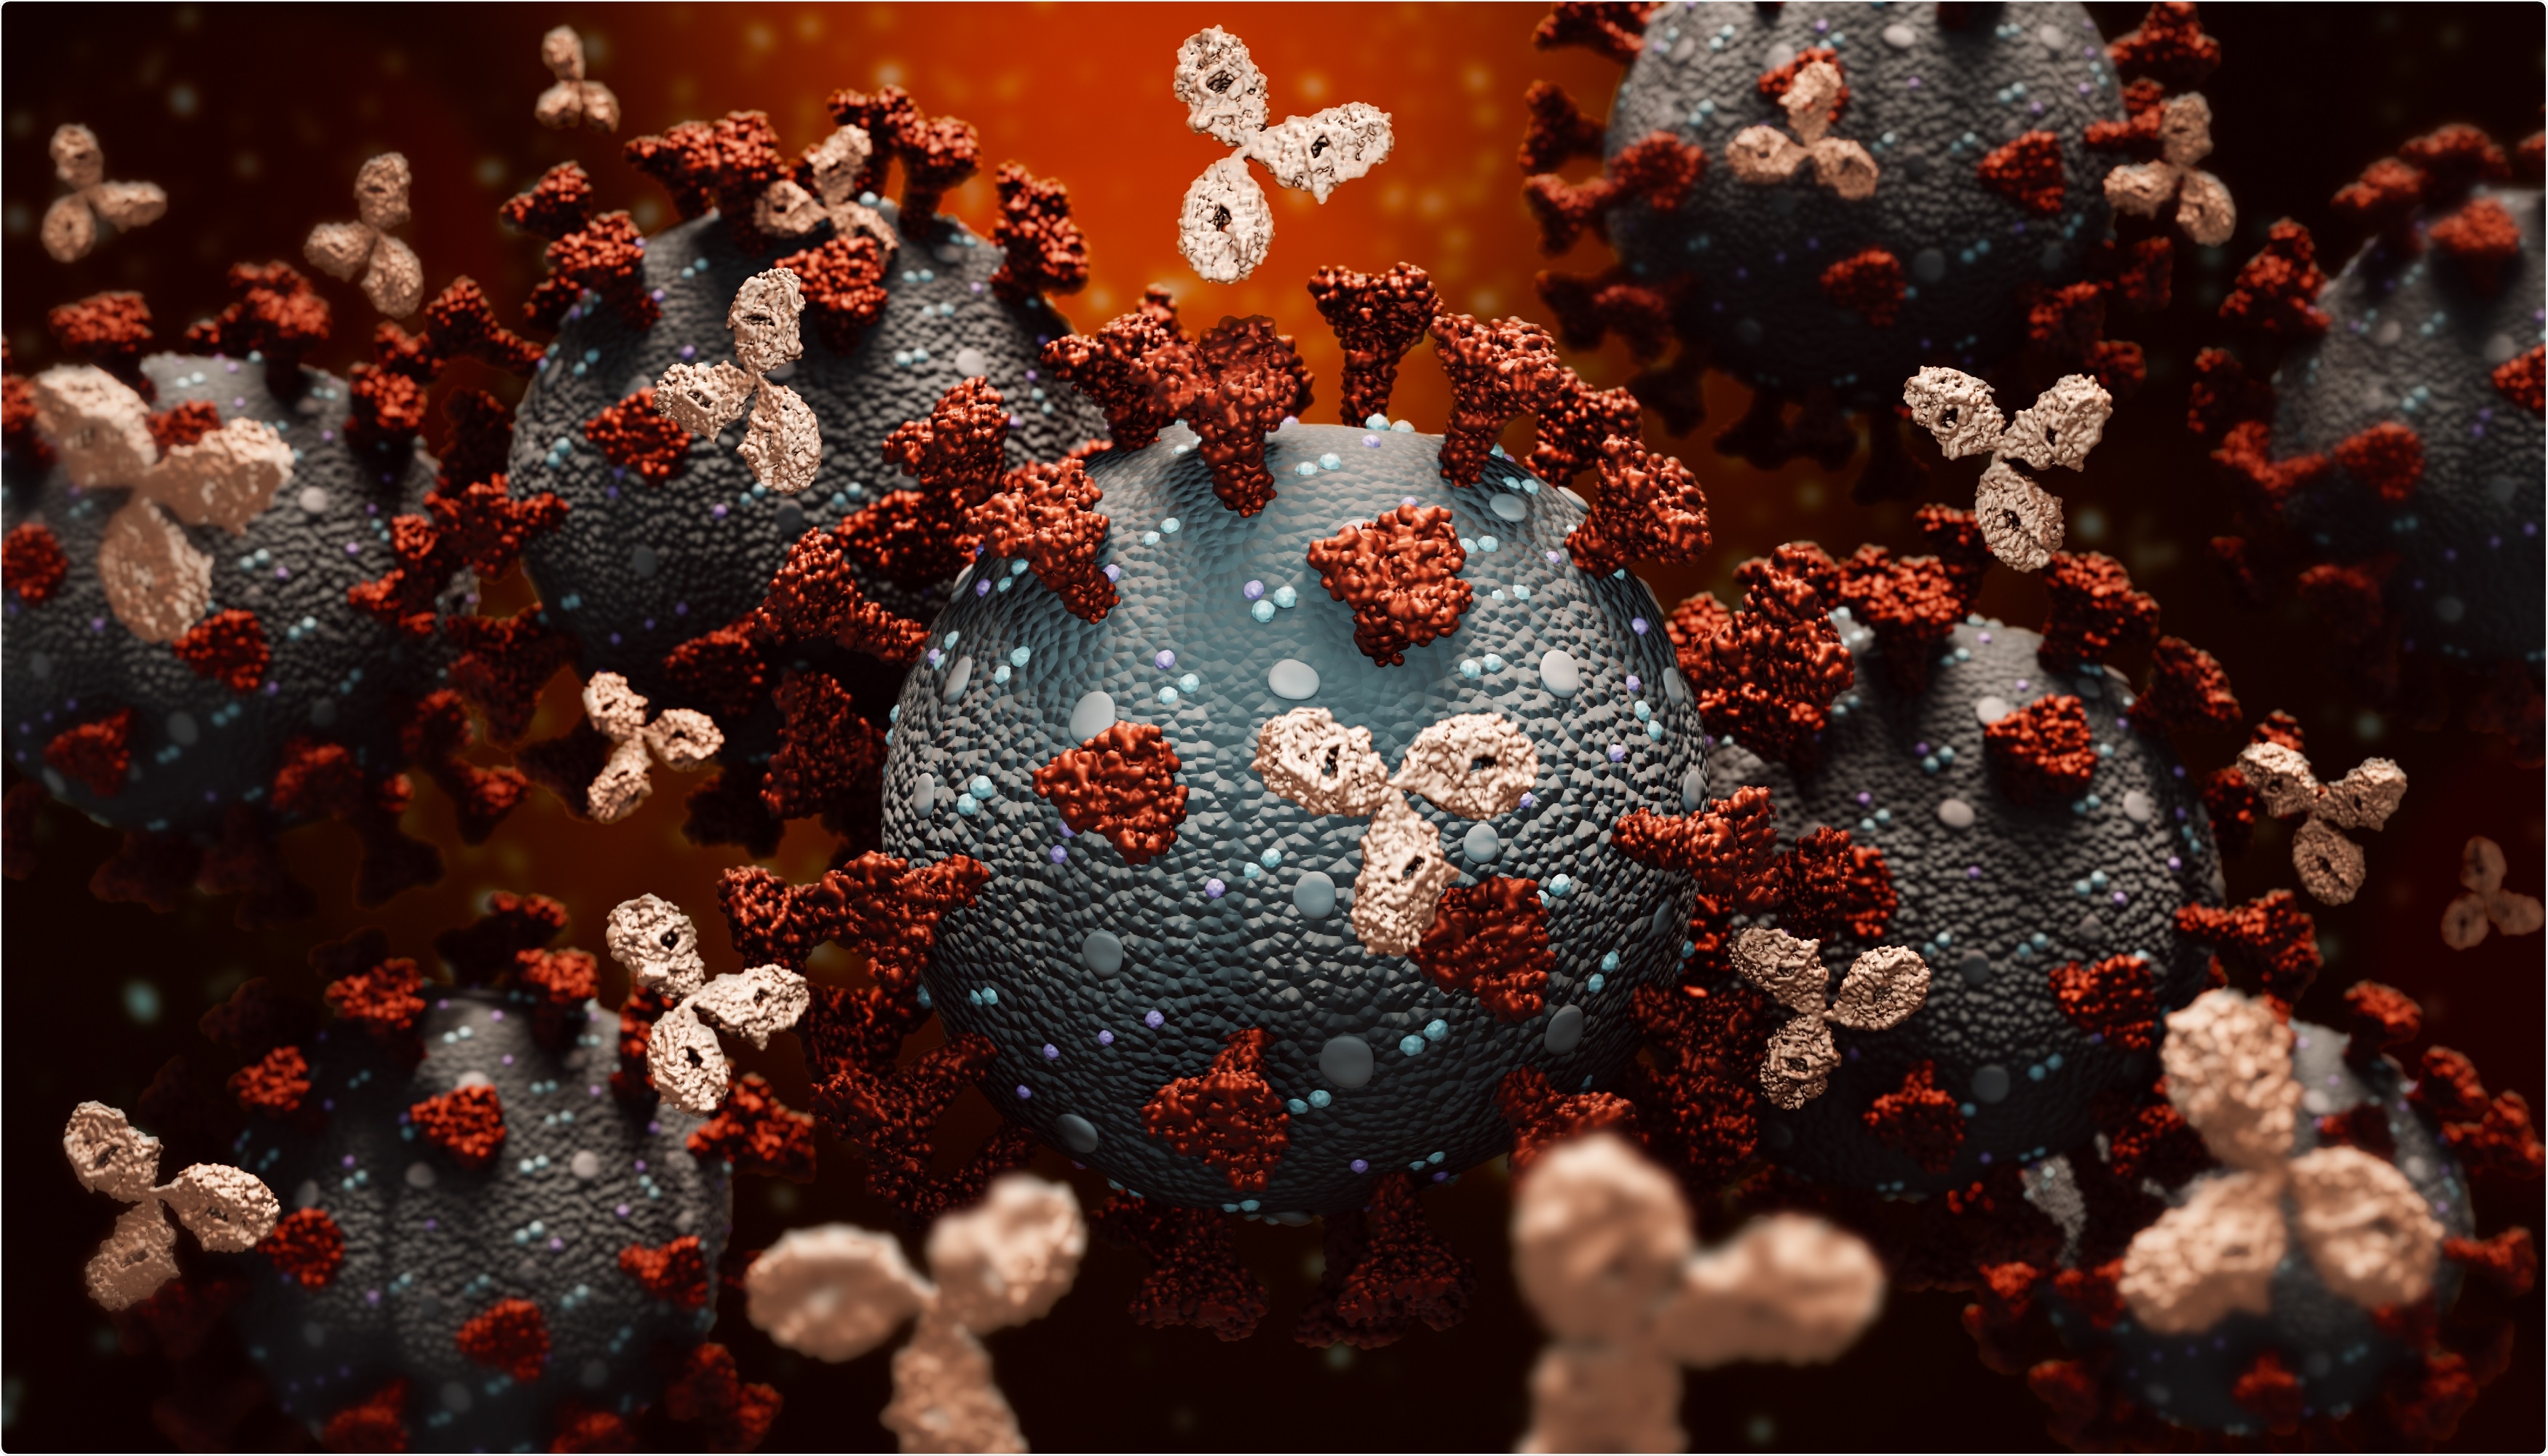 Study: Development and characterization of SARS-CoV-2 variant-neutralizing monoclonal antibodies. Image Credit: MattLphotography / Shutterstock